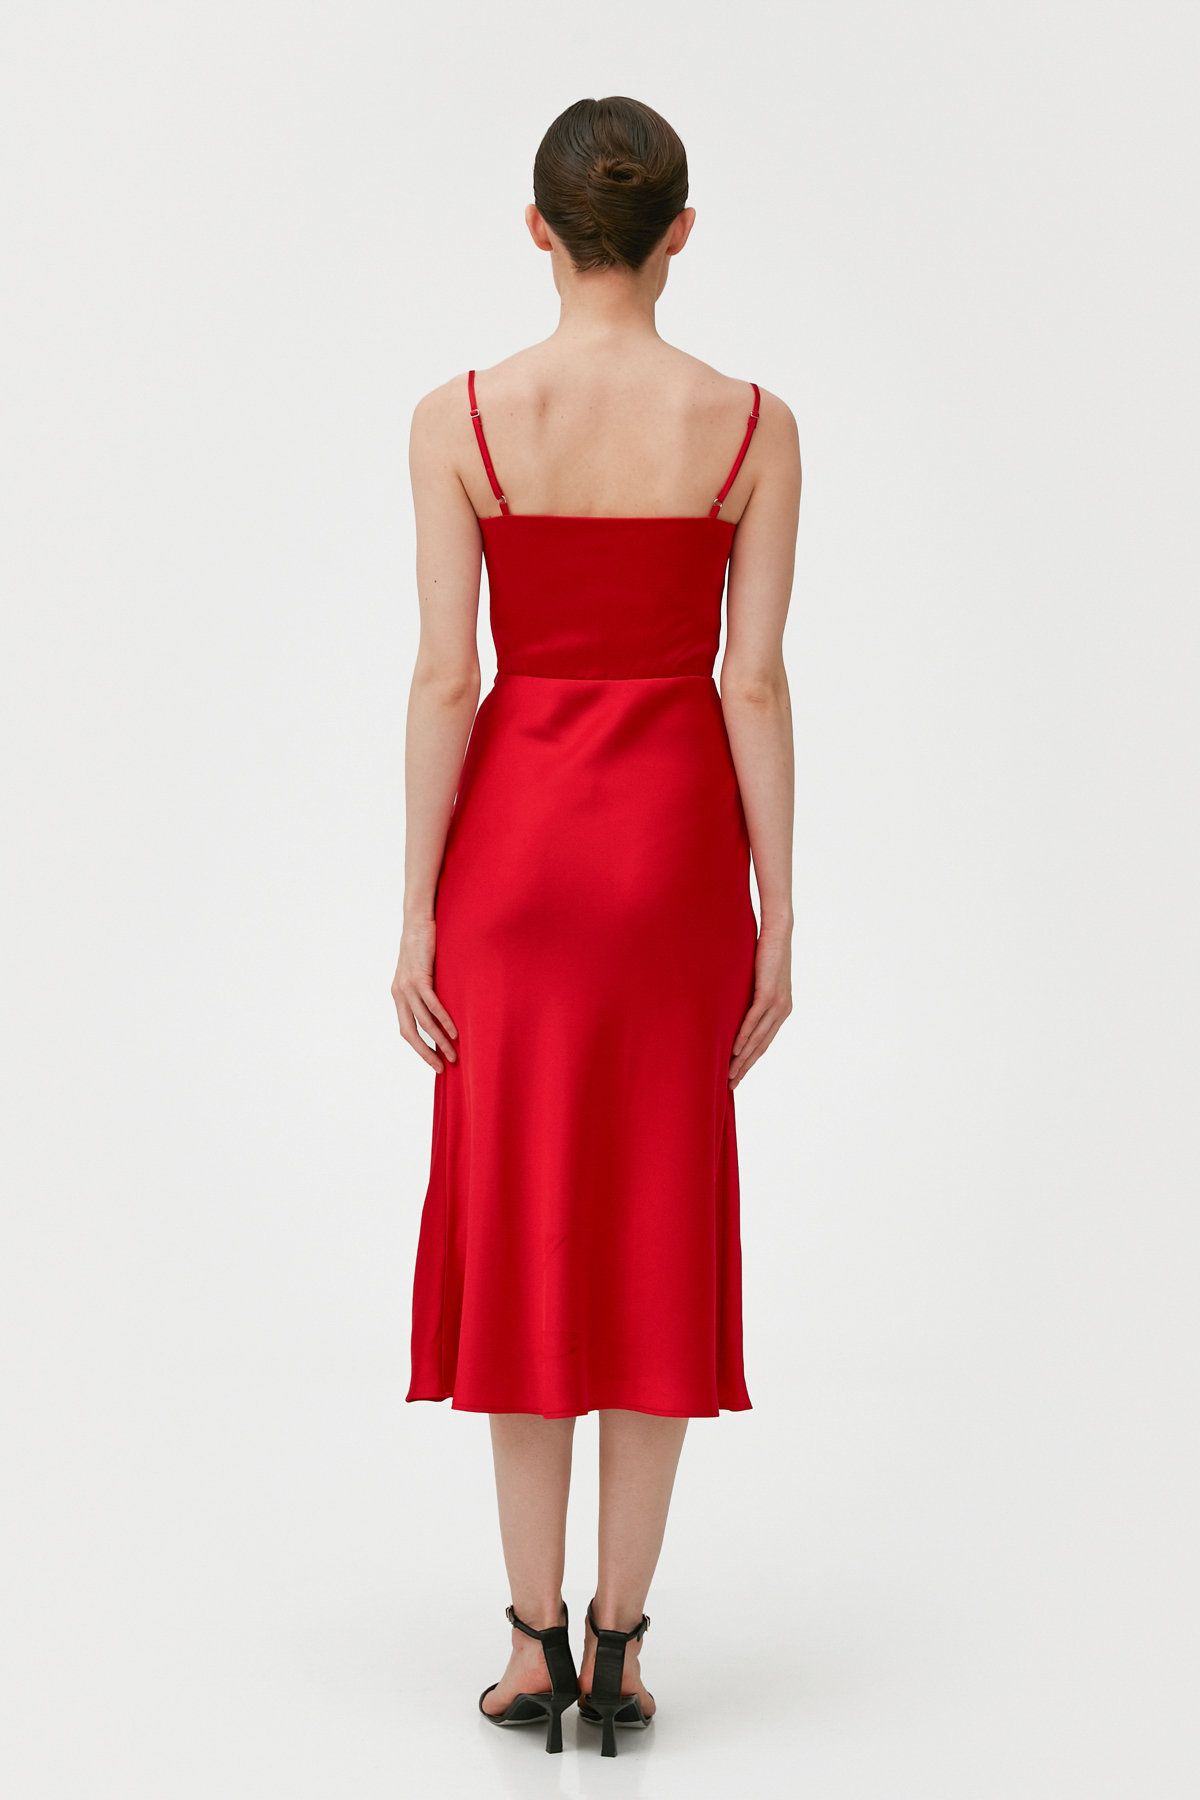 Red satin slip dress , photo 3